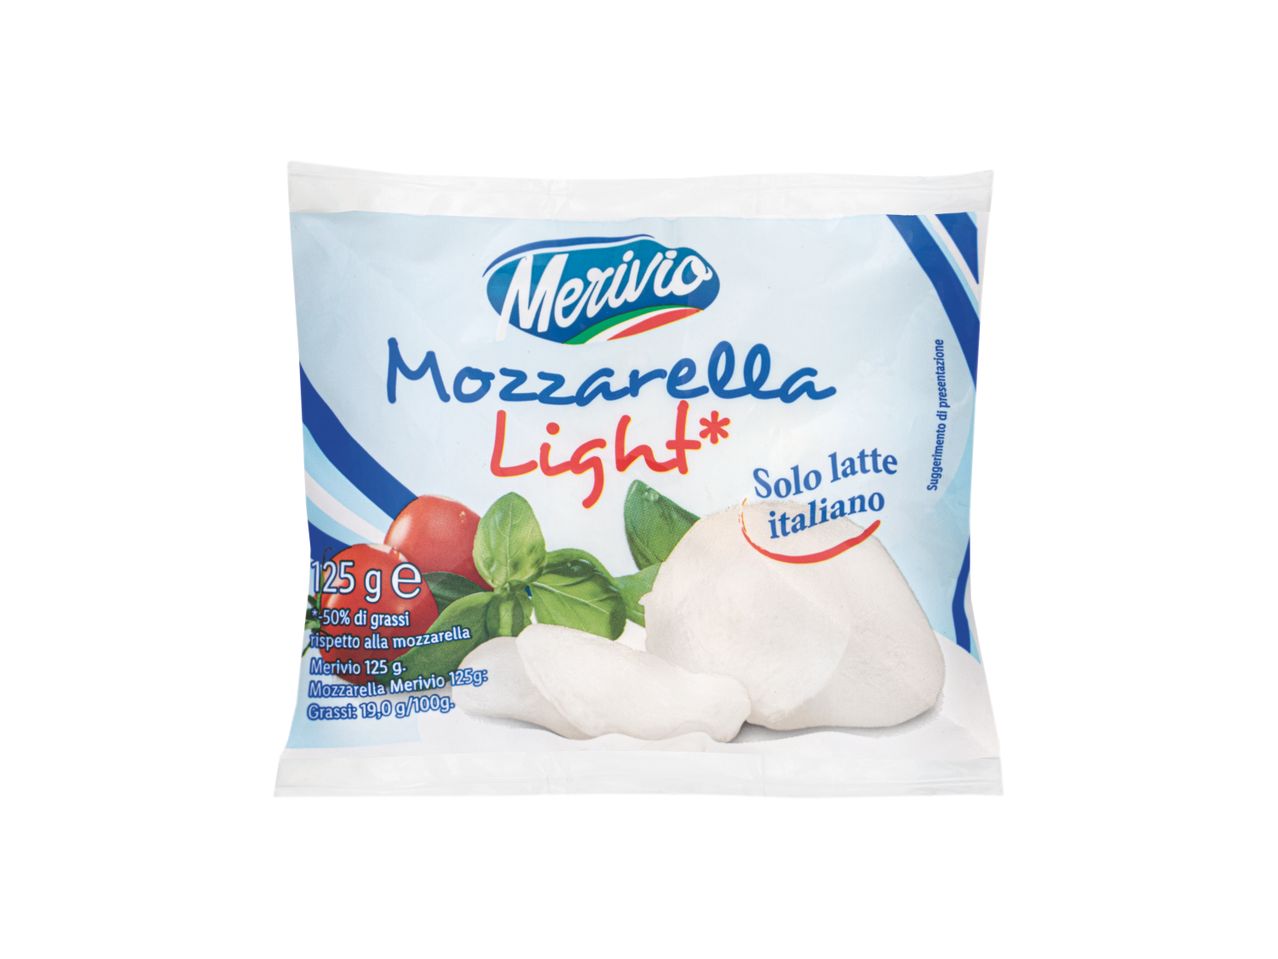 Go to full screen view: Mozzarella Light - Image 1